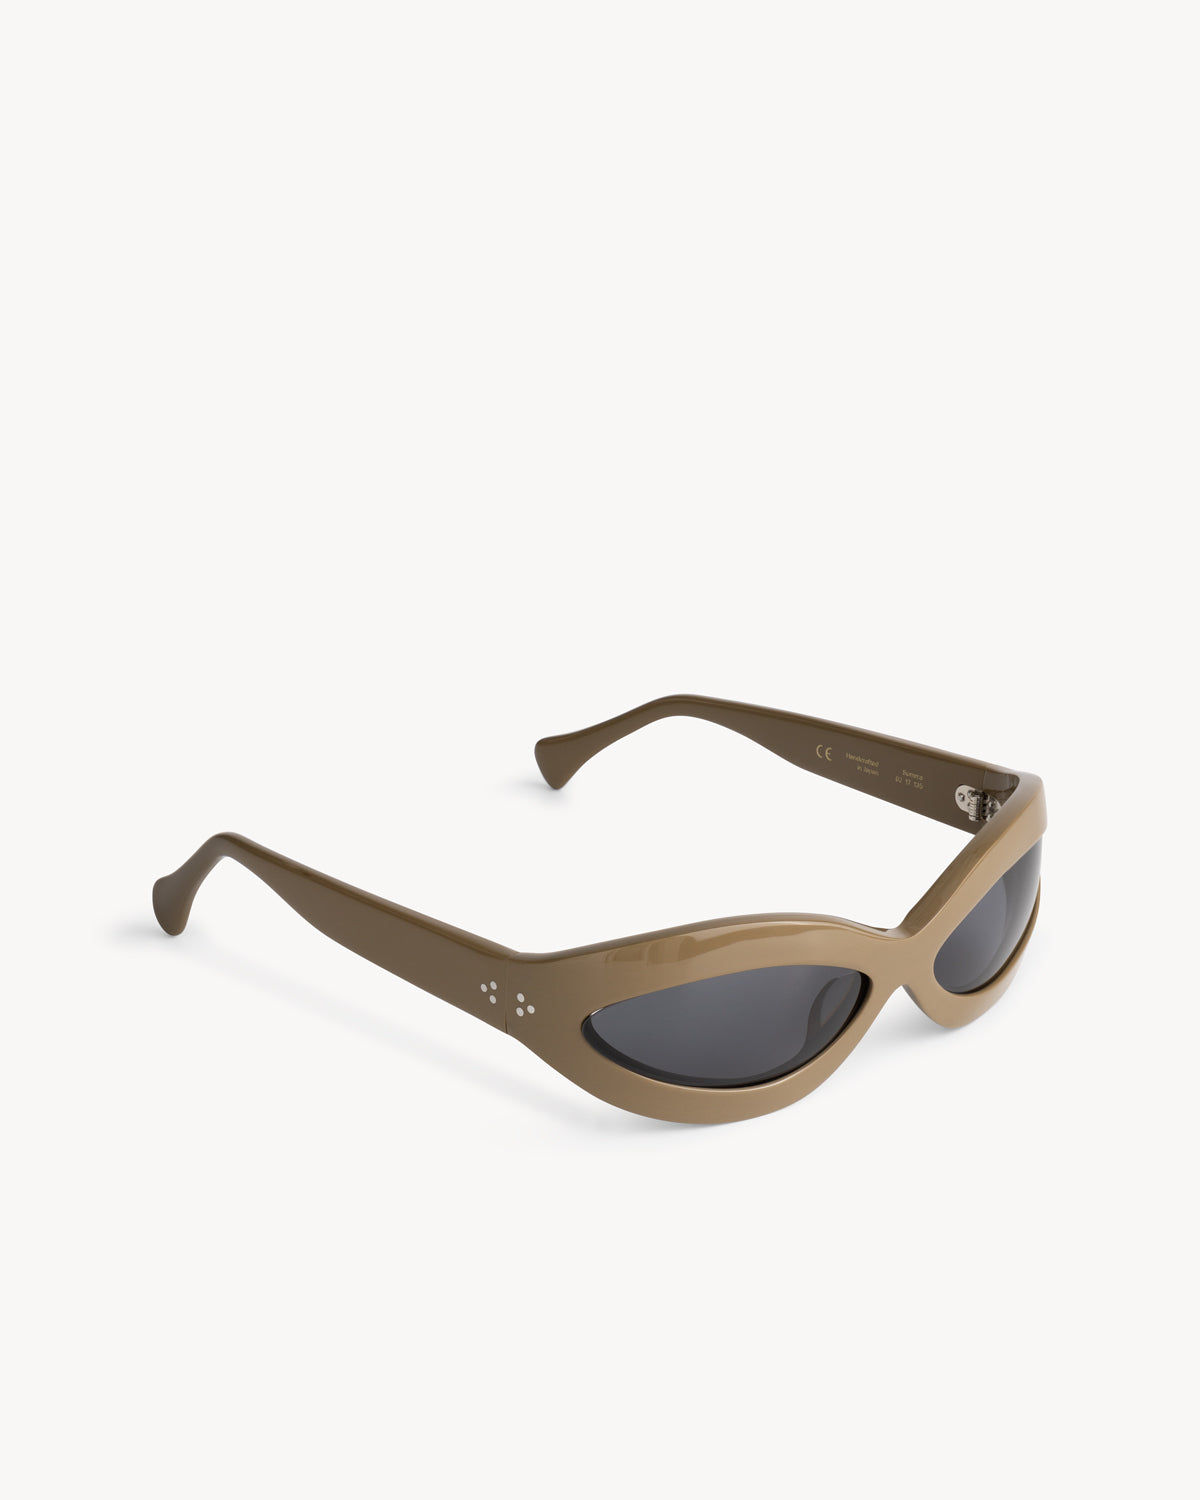 Port Tanger Summa Sunglasses in Zaytun Acetate and Black Lenses 2